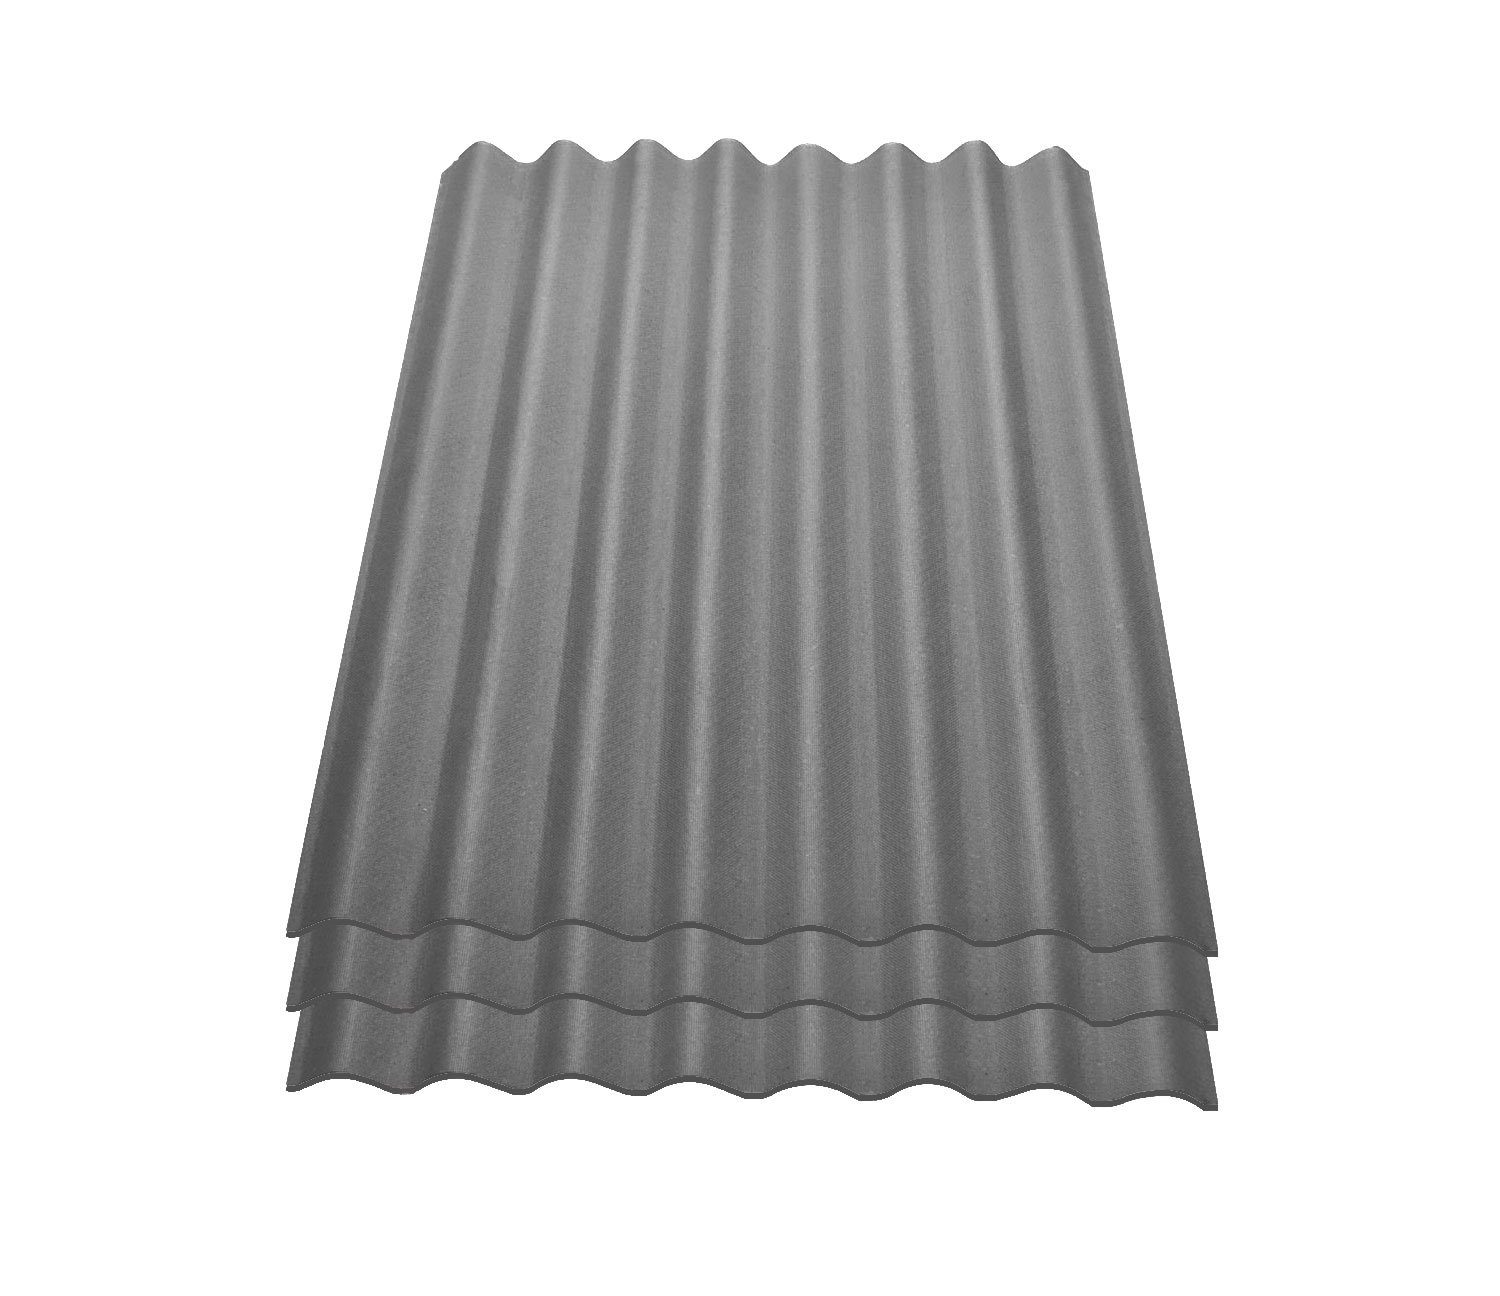 Onduline Dachpappe Onduline Easyline Dachplatte Wandplatte Bitumenwellplatten Wellplatte 3x0,76m² - grau, wellig, 2.28 m² pro Paket, (3-St)